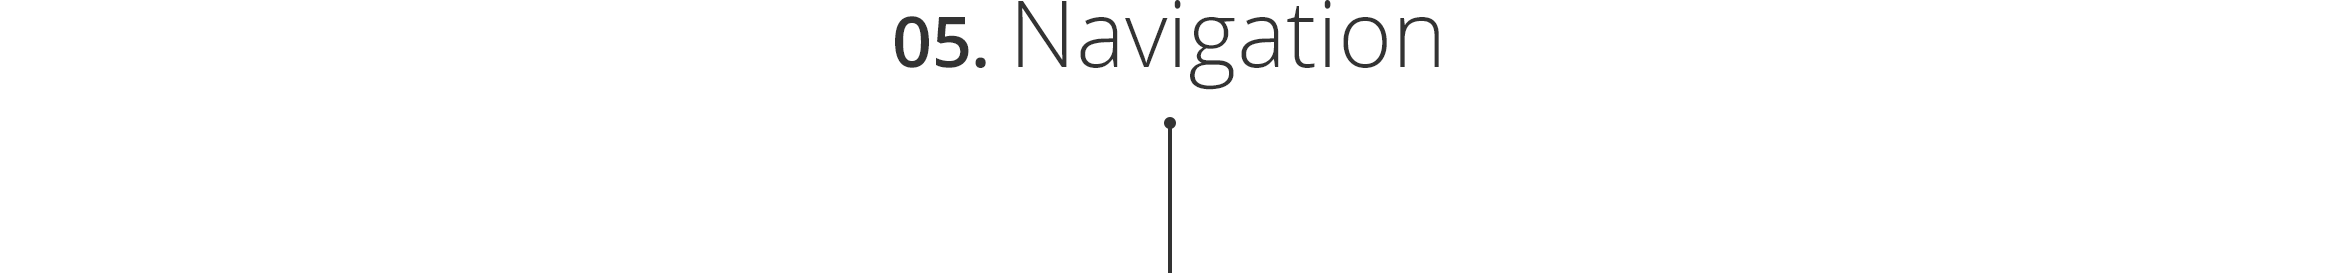 13-valor-economico-navigation